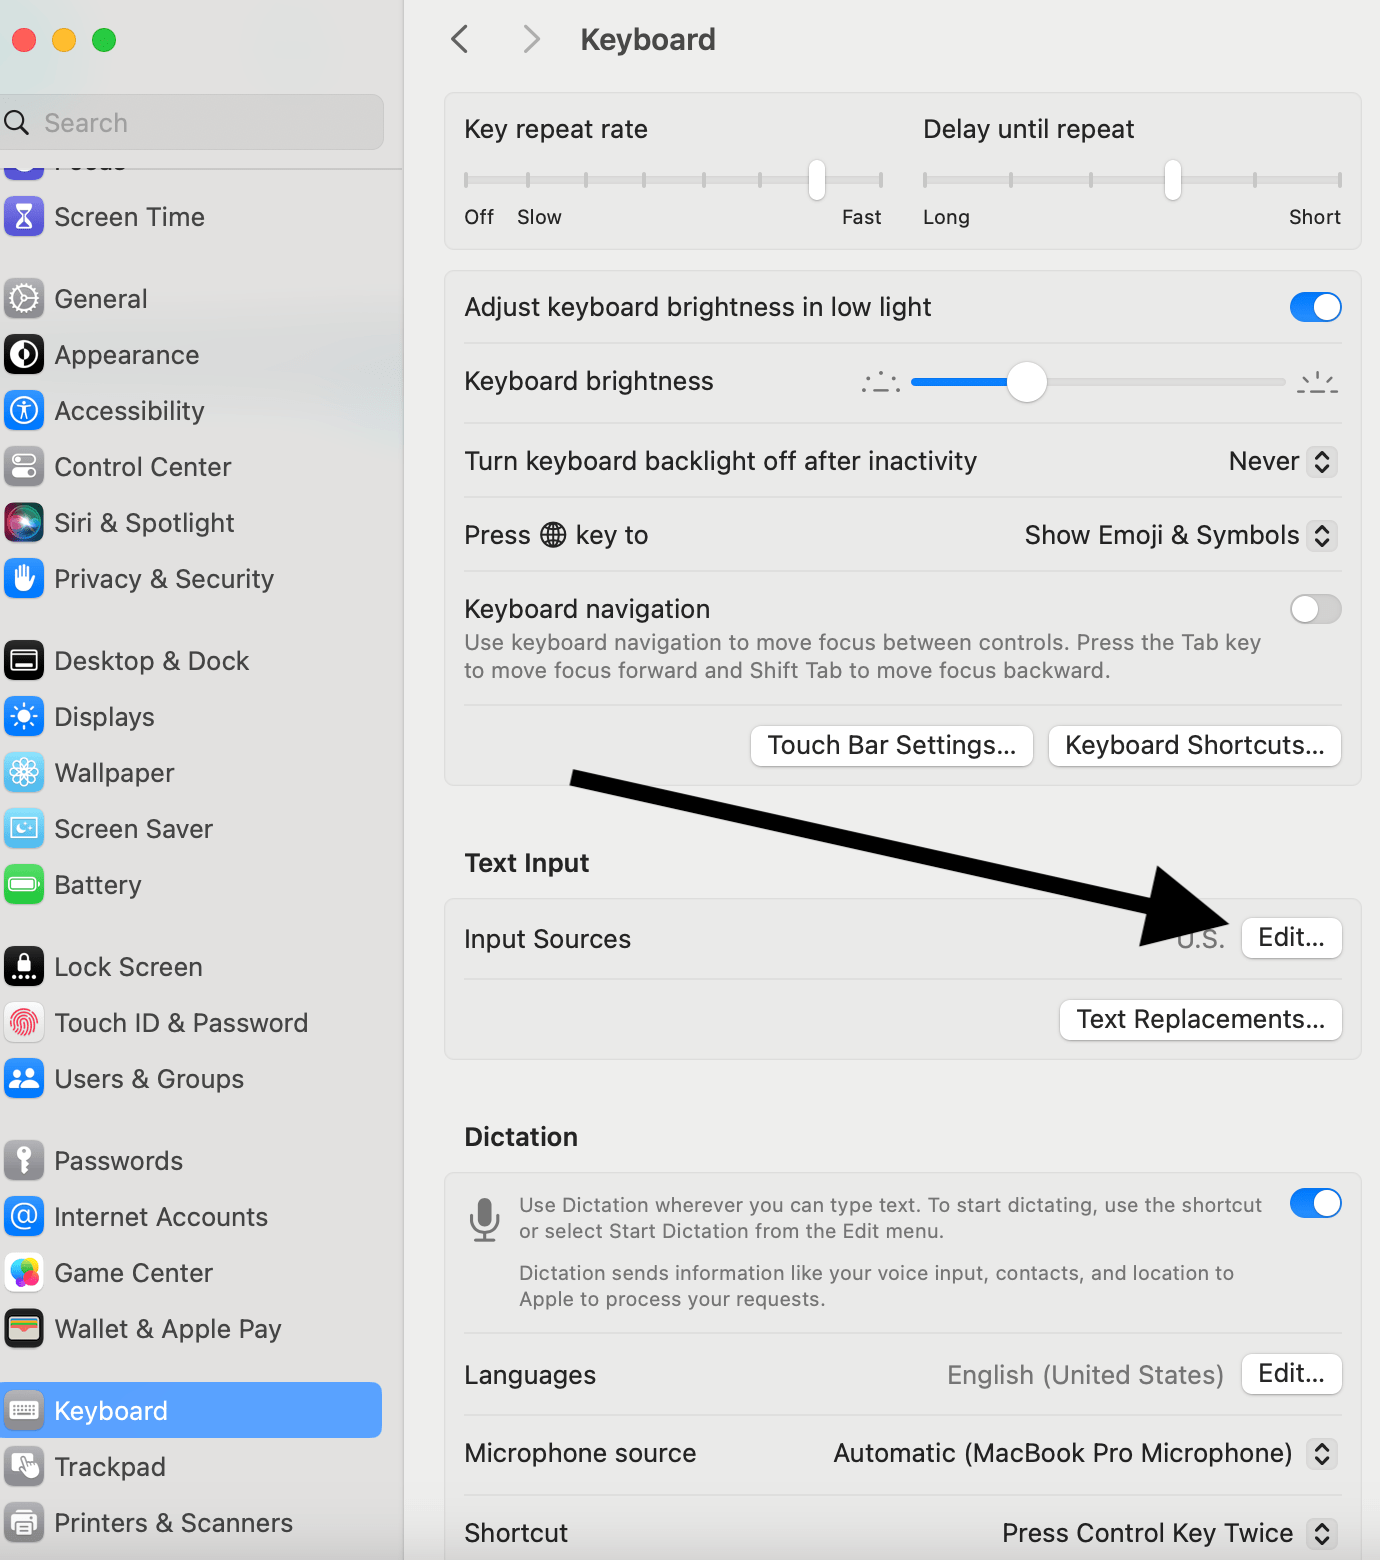 Keyboard settings screen on Mac